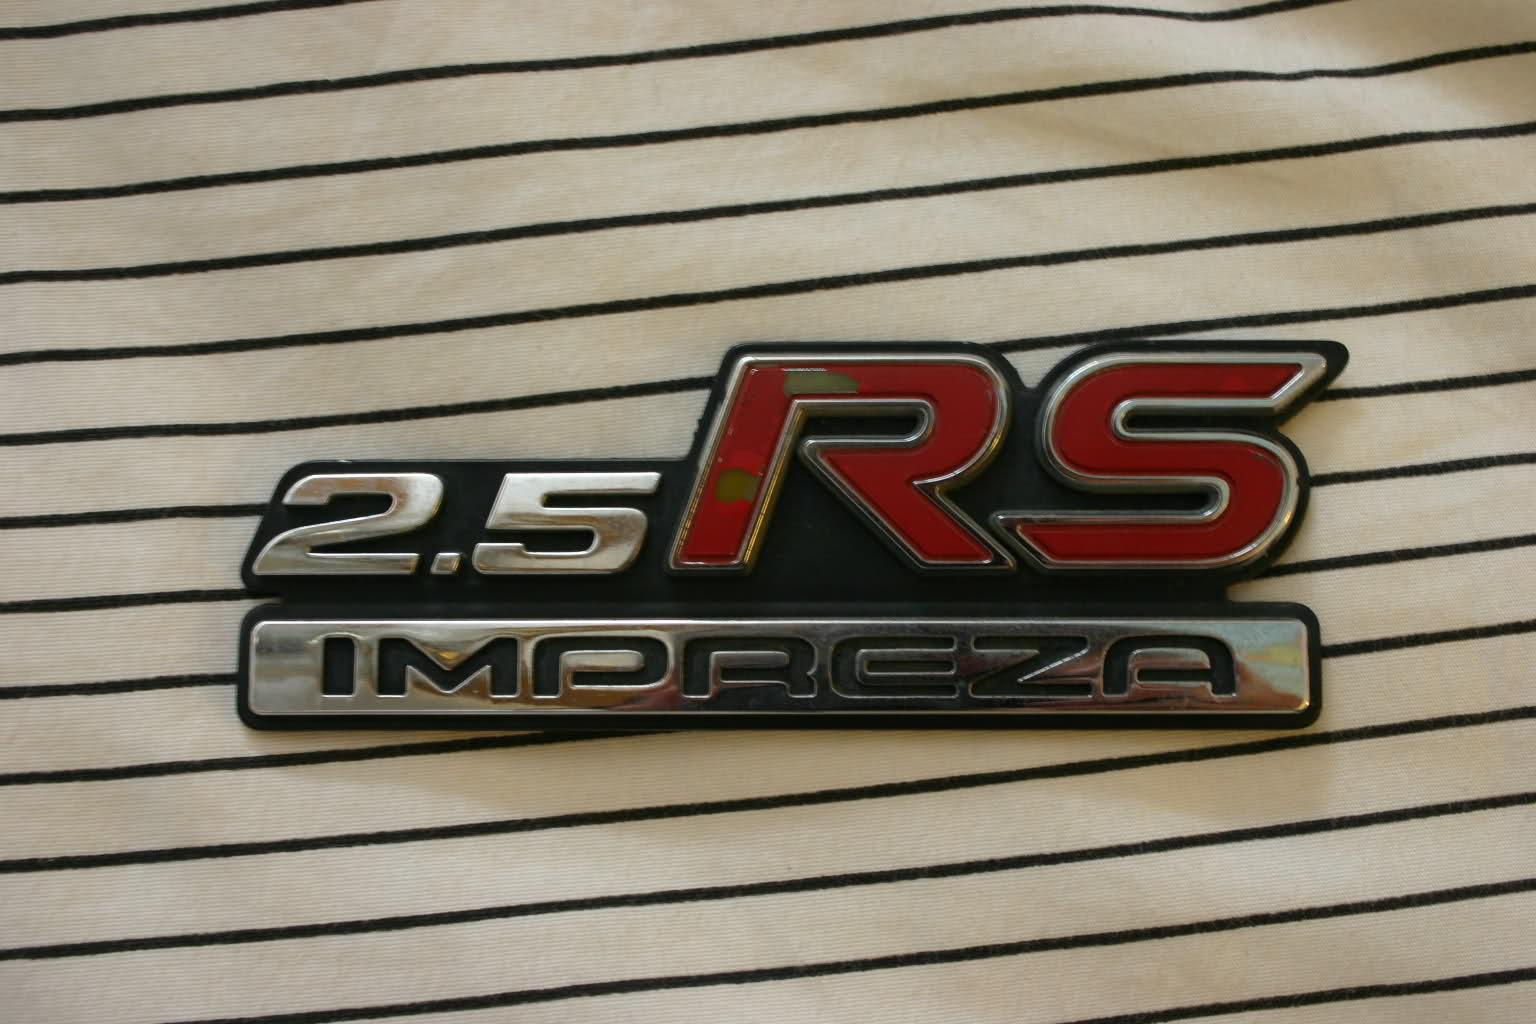 Subaru 2.5 RS Logo - SOLD] Rear 2.5 RS Trunk Badge - Subaru Impreza GC8 & RS Forum ...